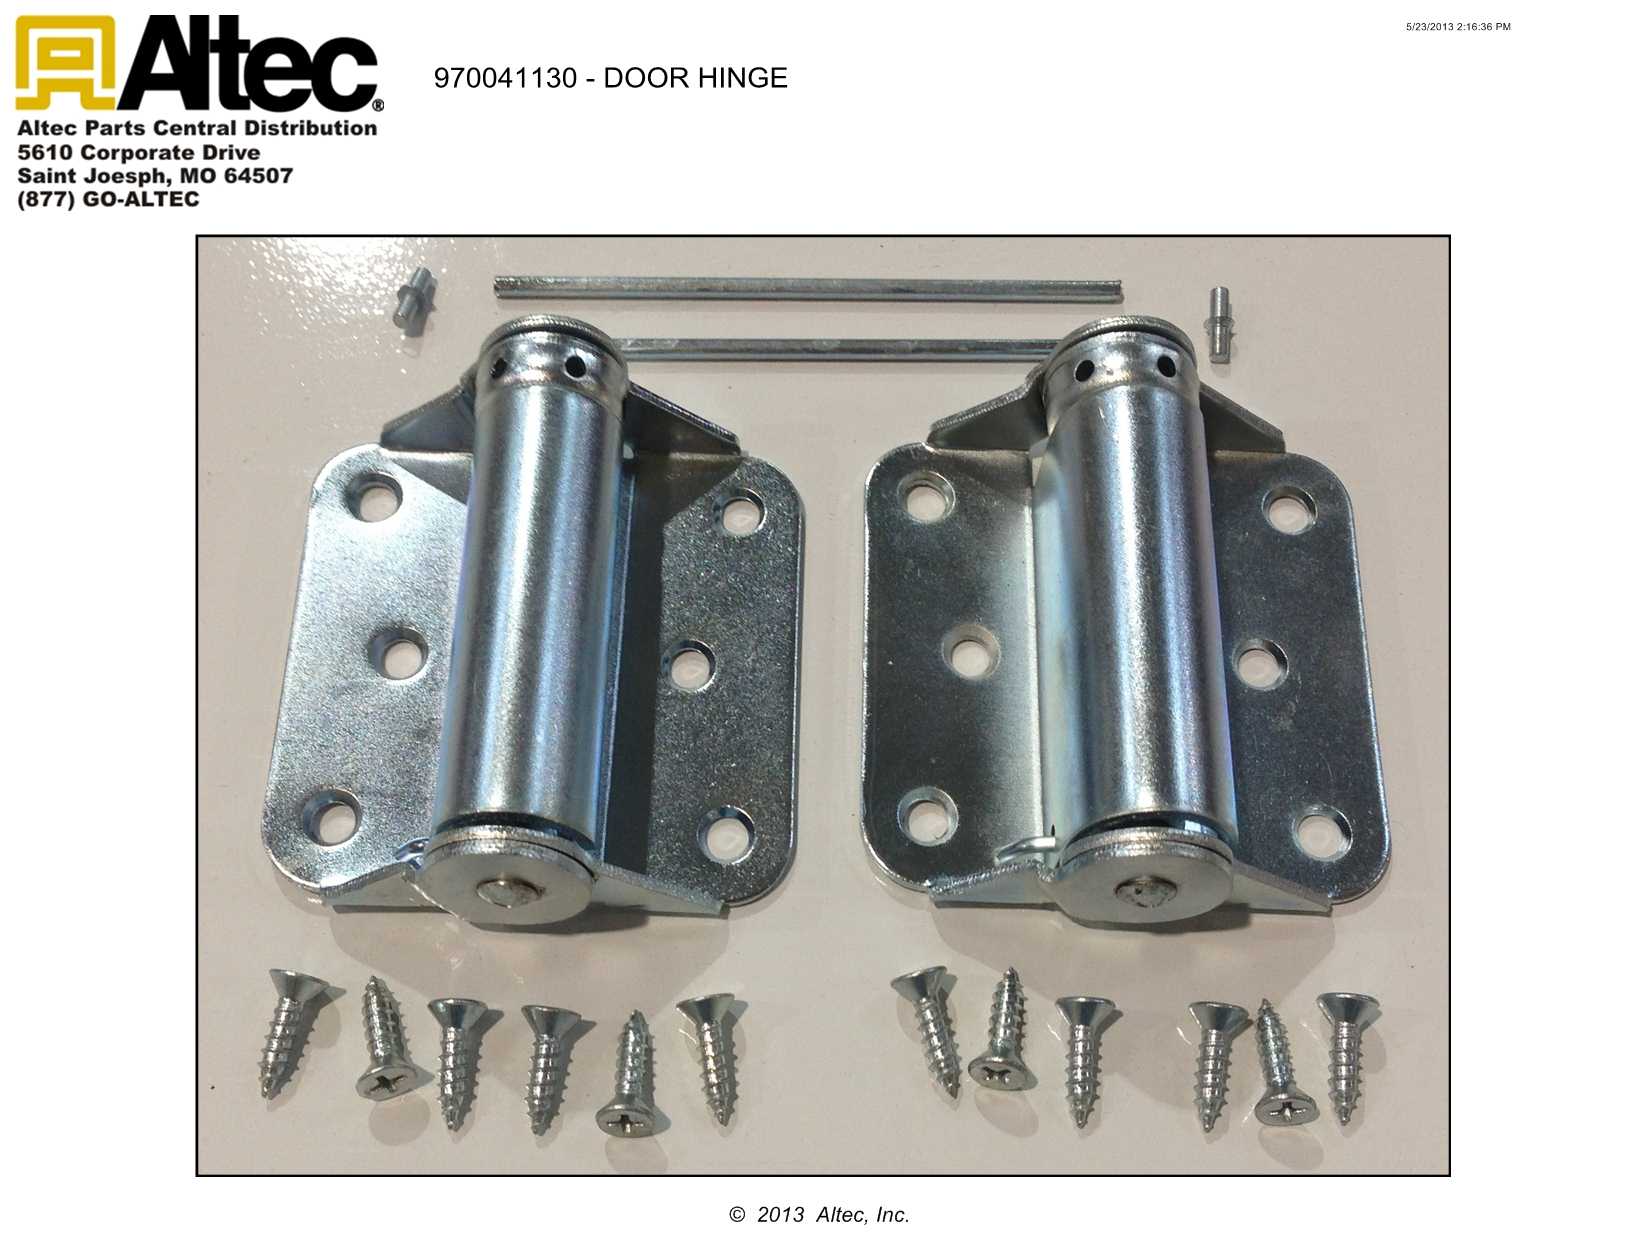 Door Hinge Kit 4PA75 with Fastening Hardware 2 Doors, Rounded Corners Altec Inc.